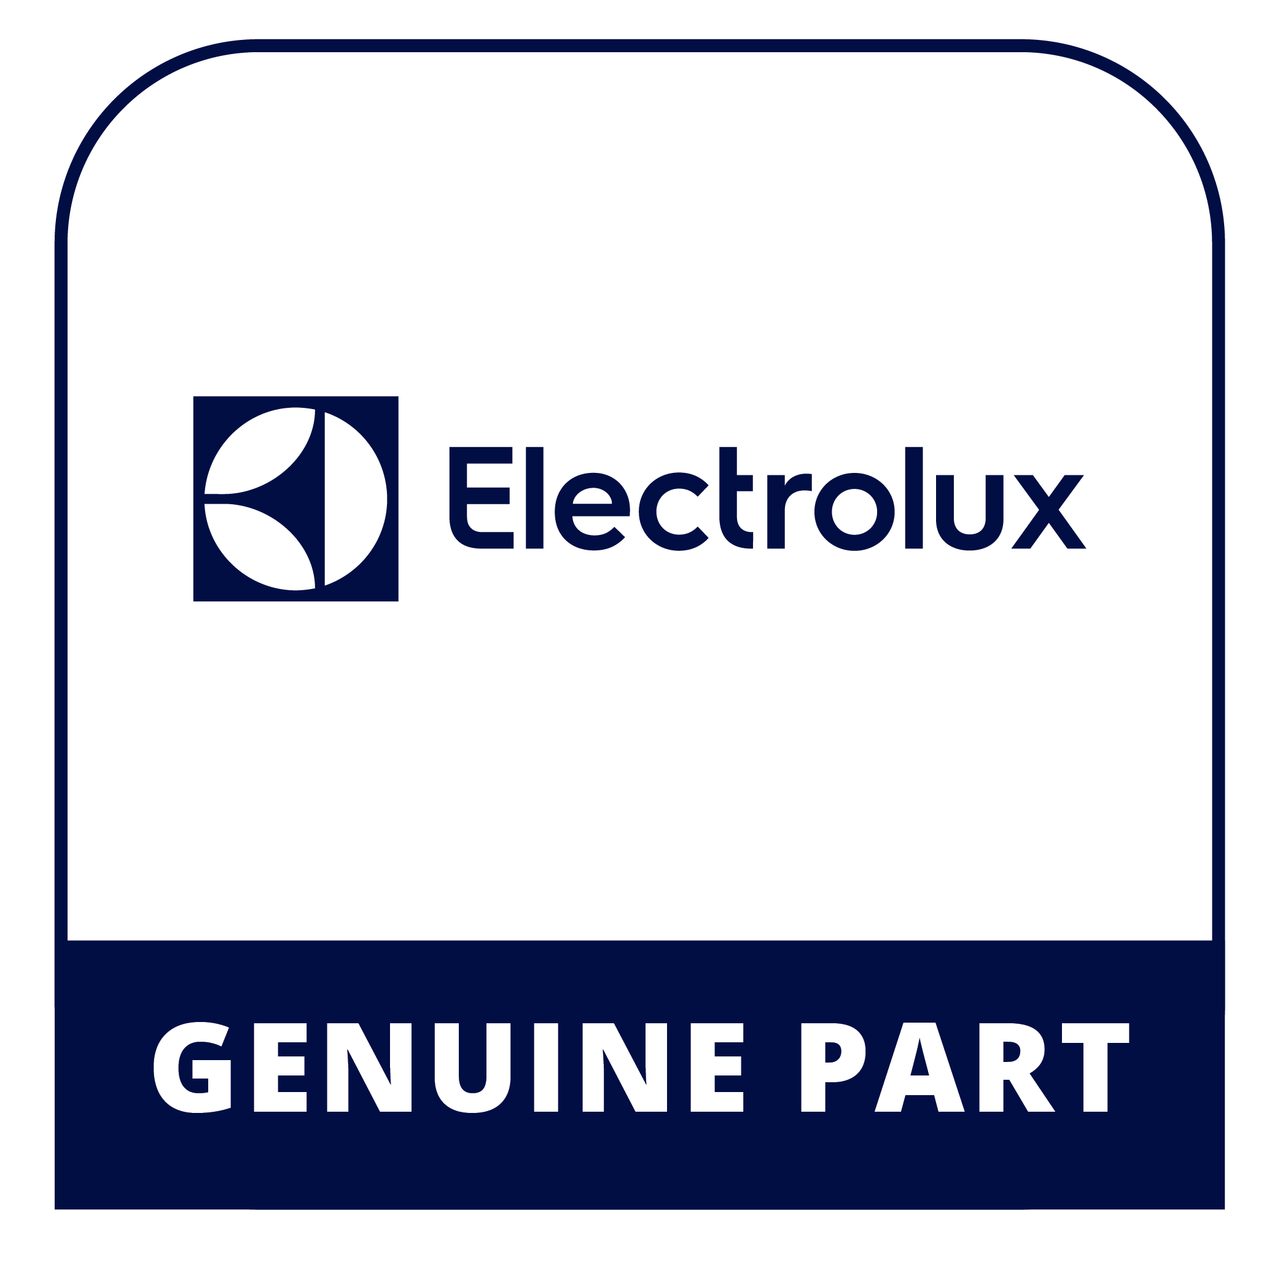 Frigidaire - Electrolux 5304502098 Sensor - Genuine Electrolux Part